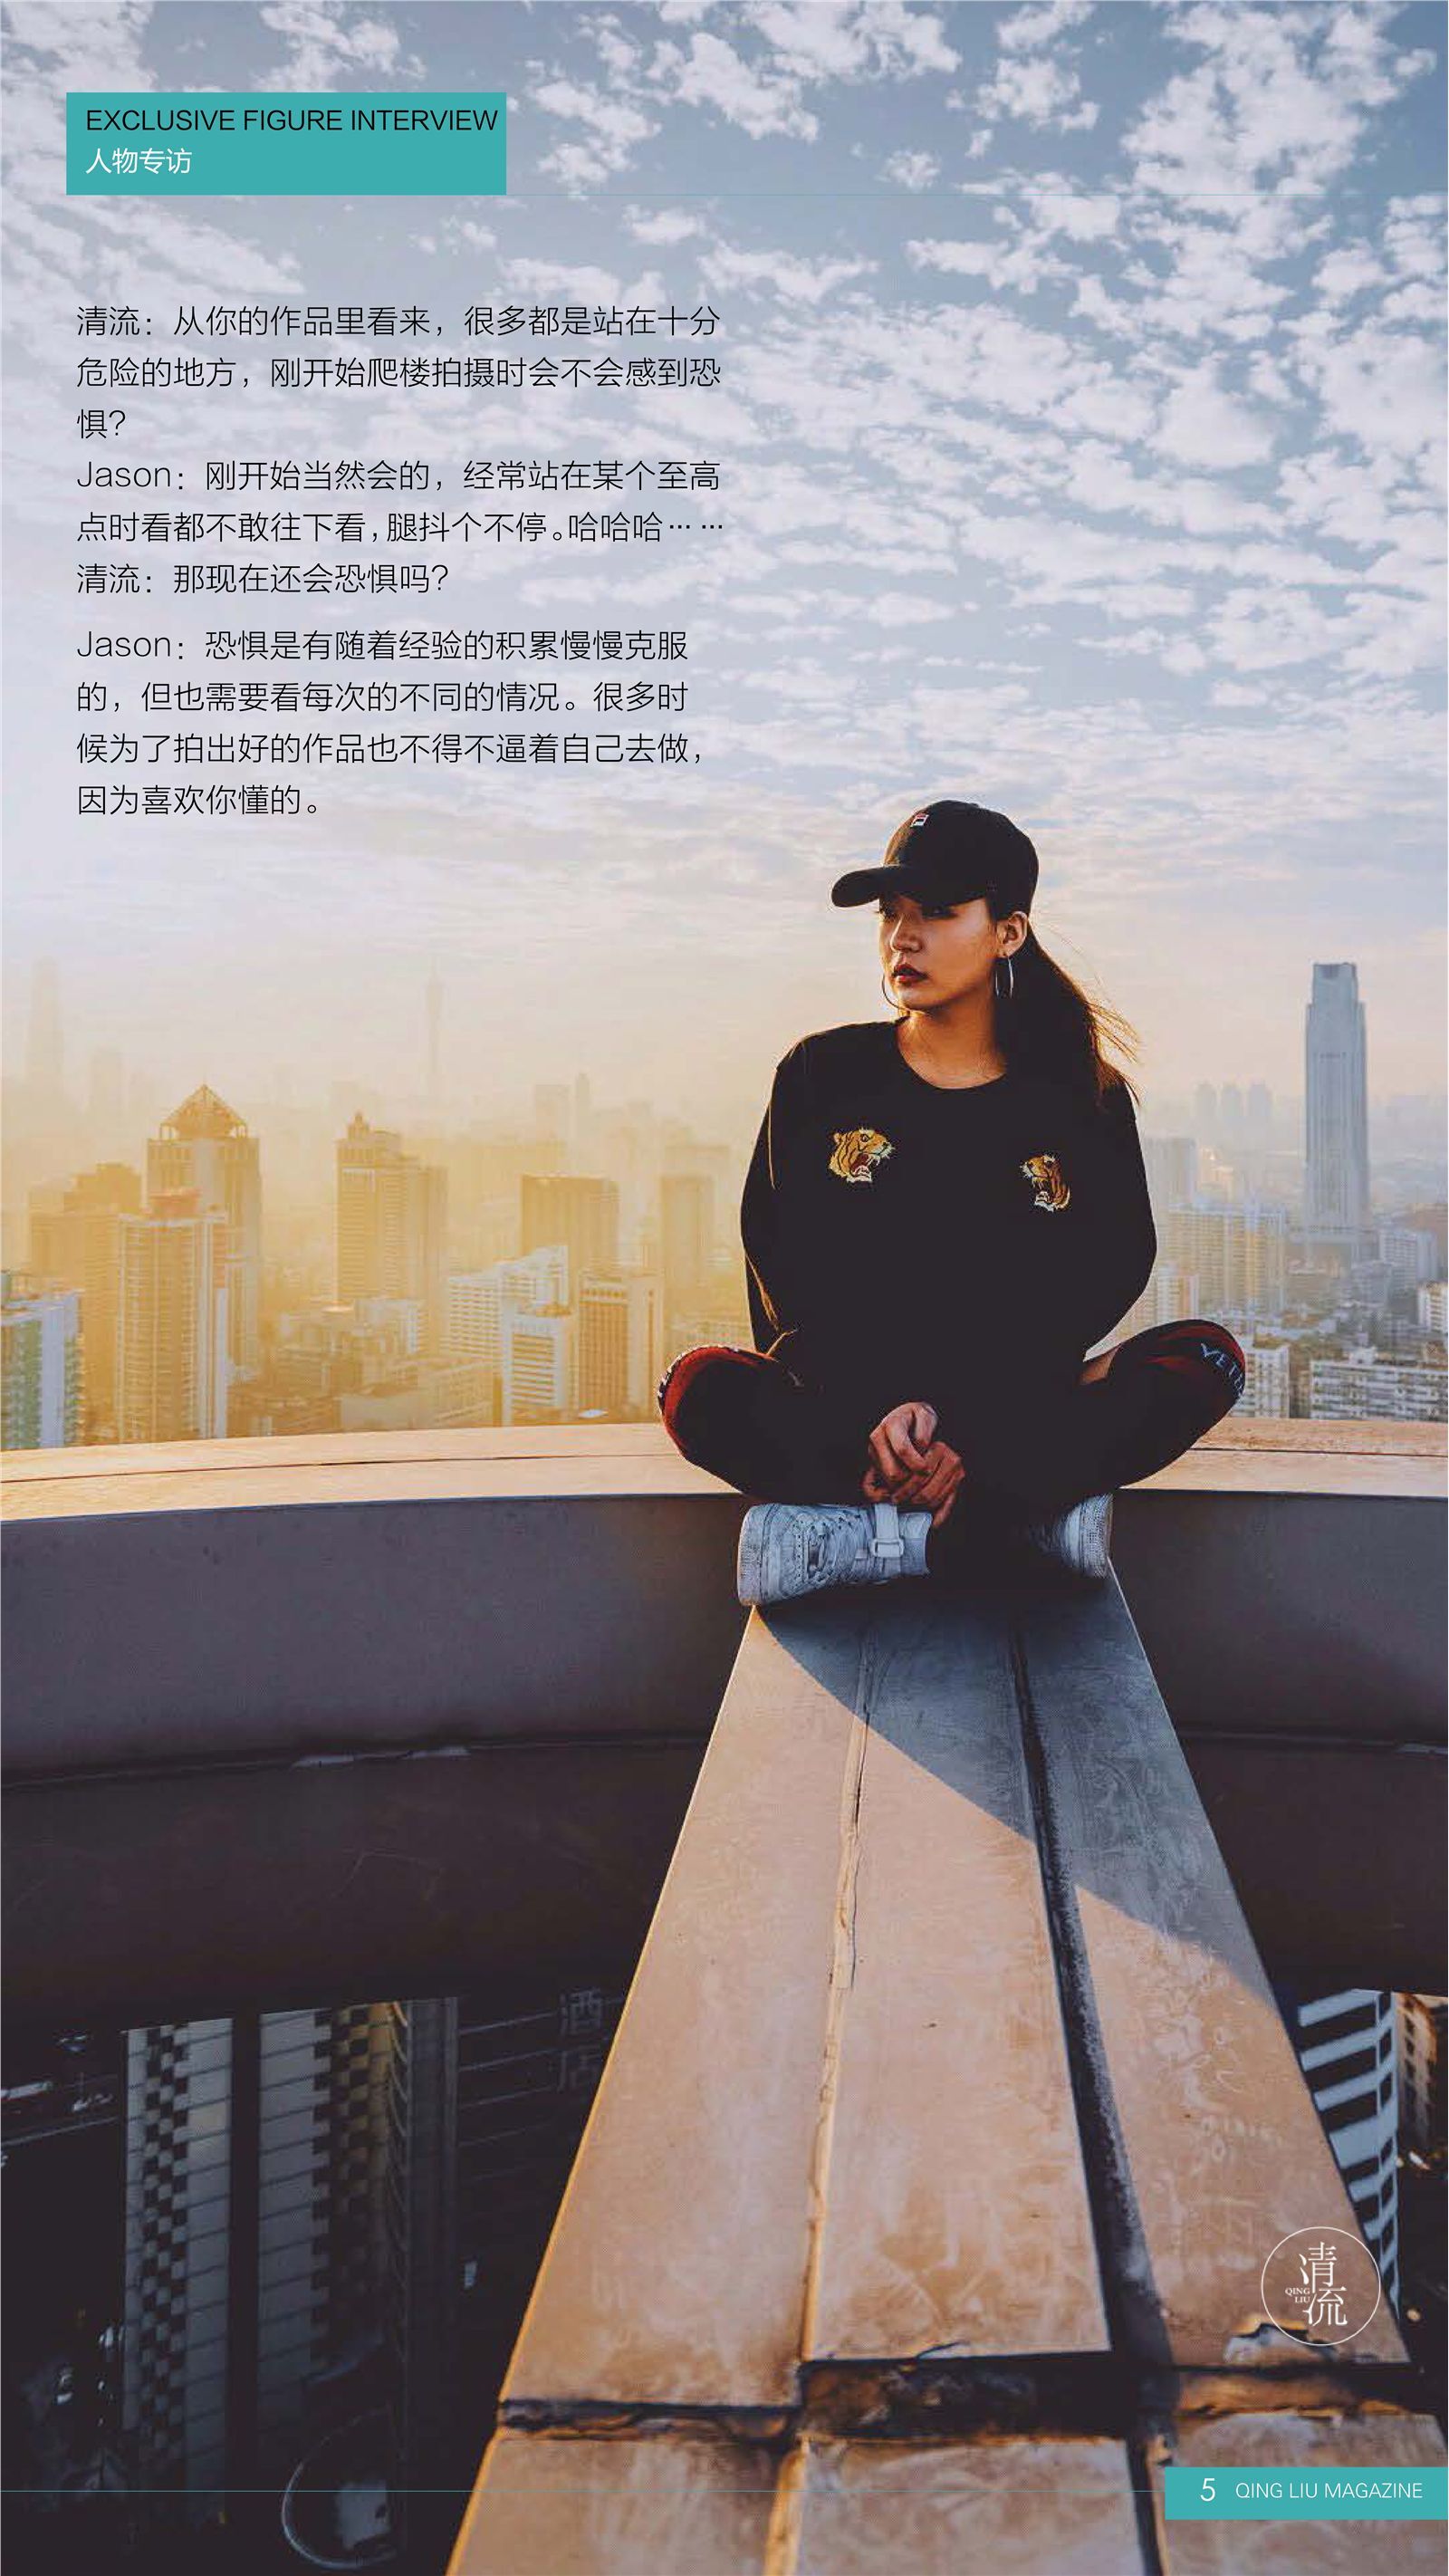 Qingliu, September 15, 2017, issue 3